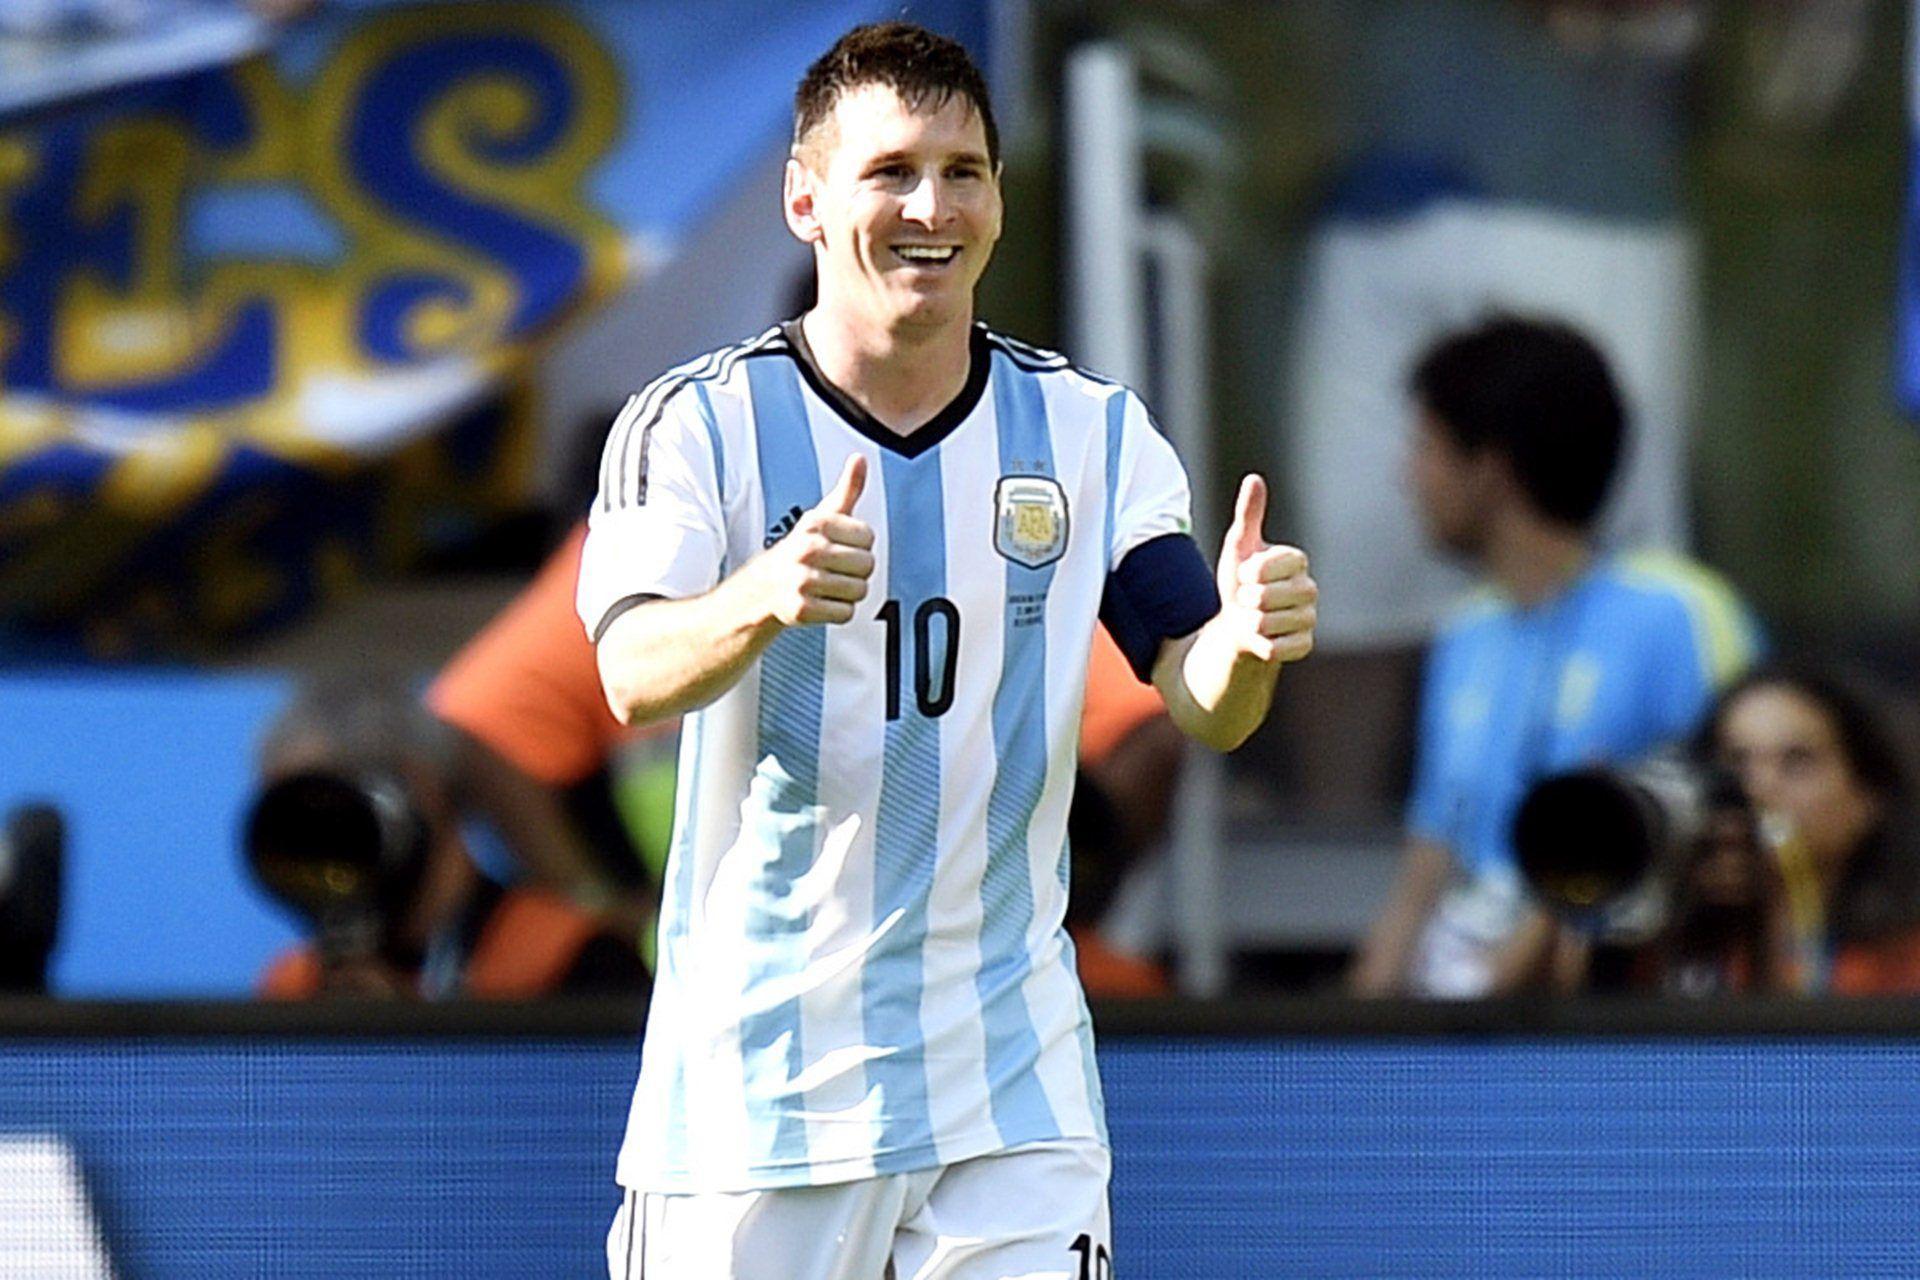 Messi Argentina Wallpaper Background HD. Wallpaper, Background